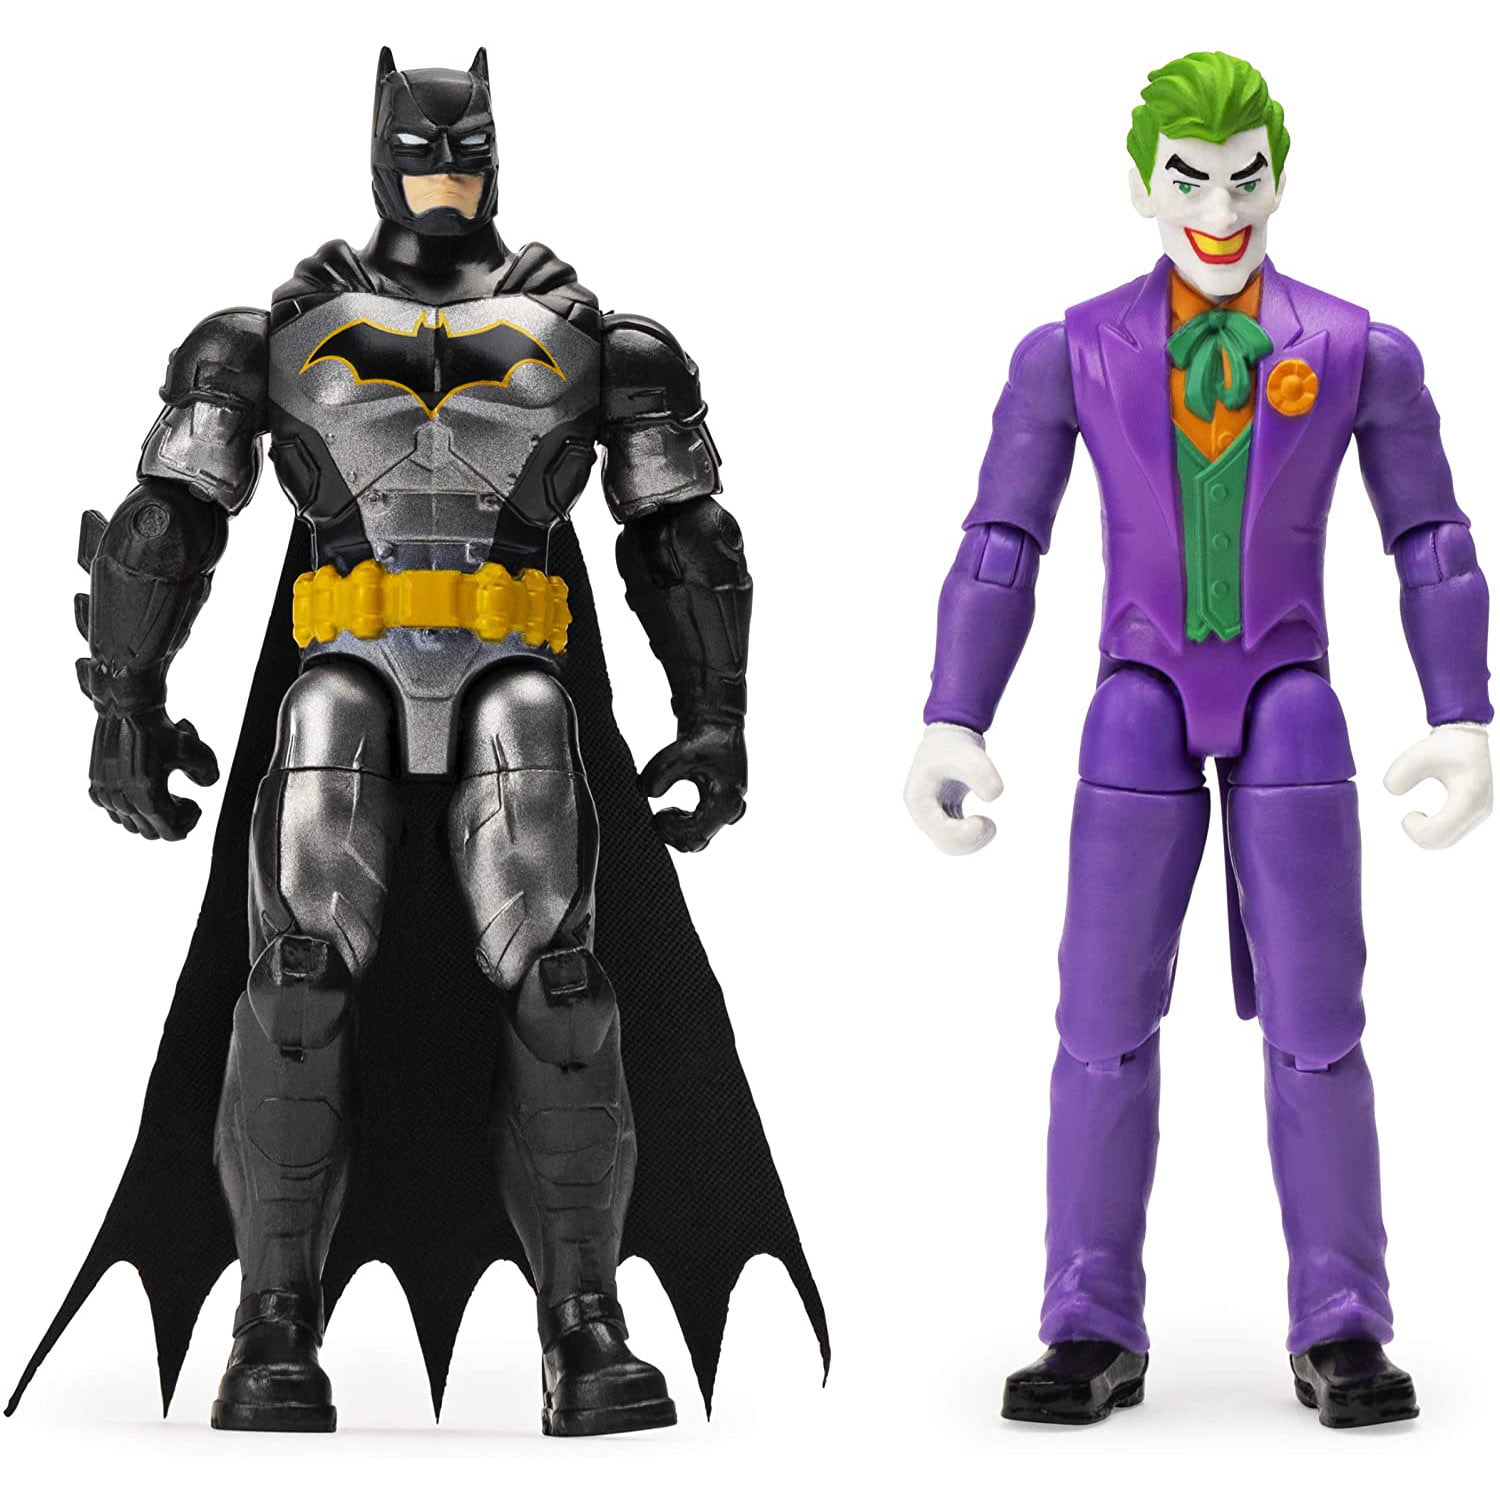 Batman 12-inch The Joker Action Figure 2020 for sale online 